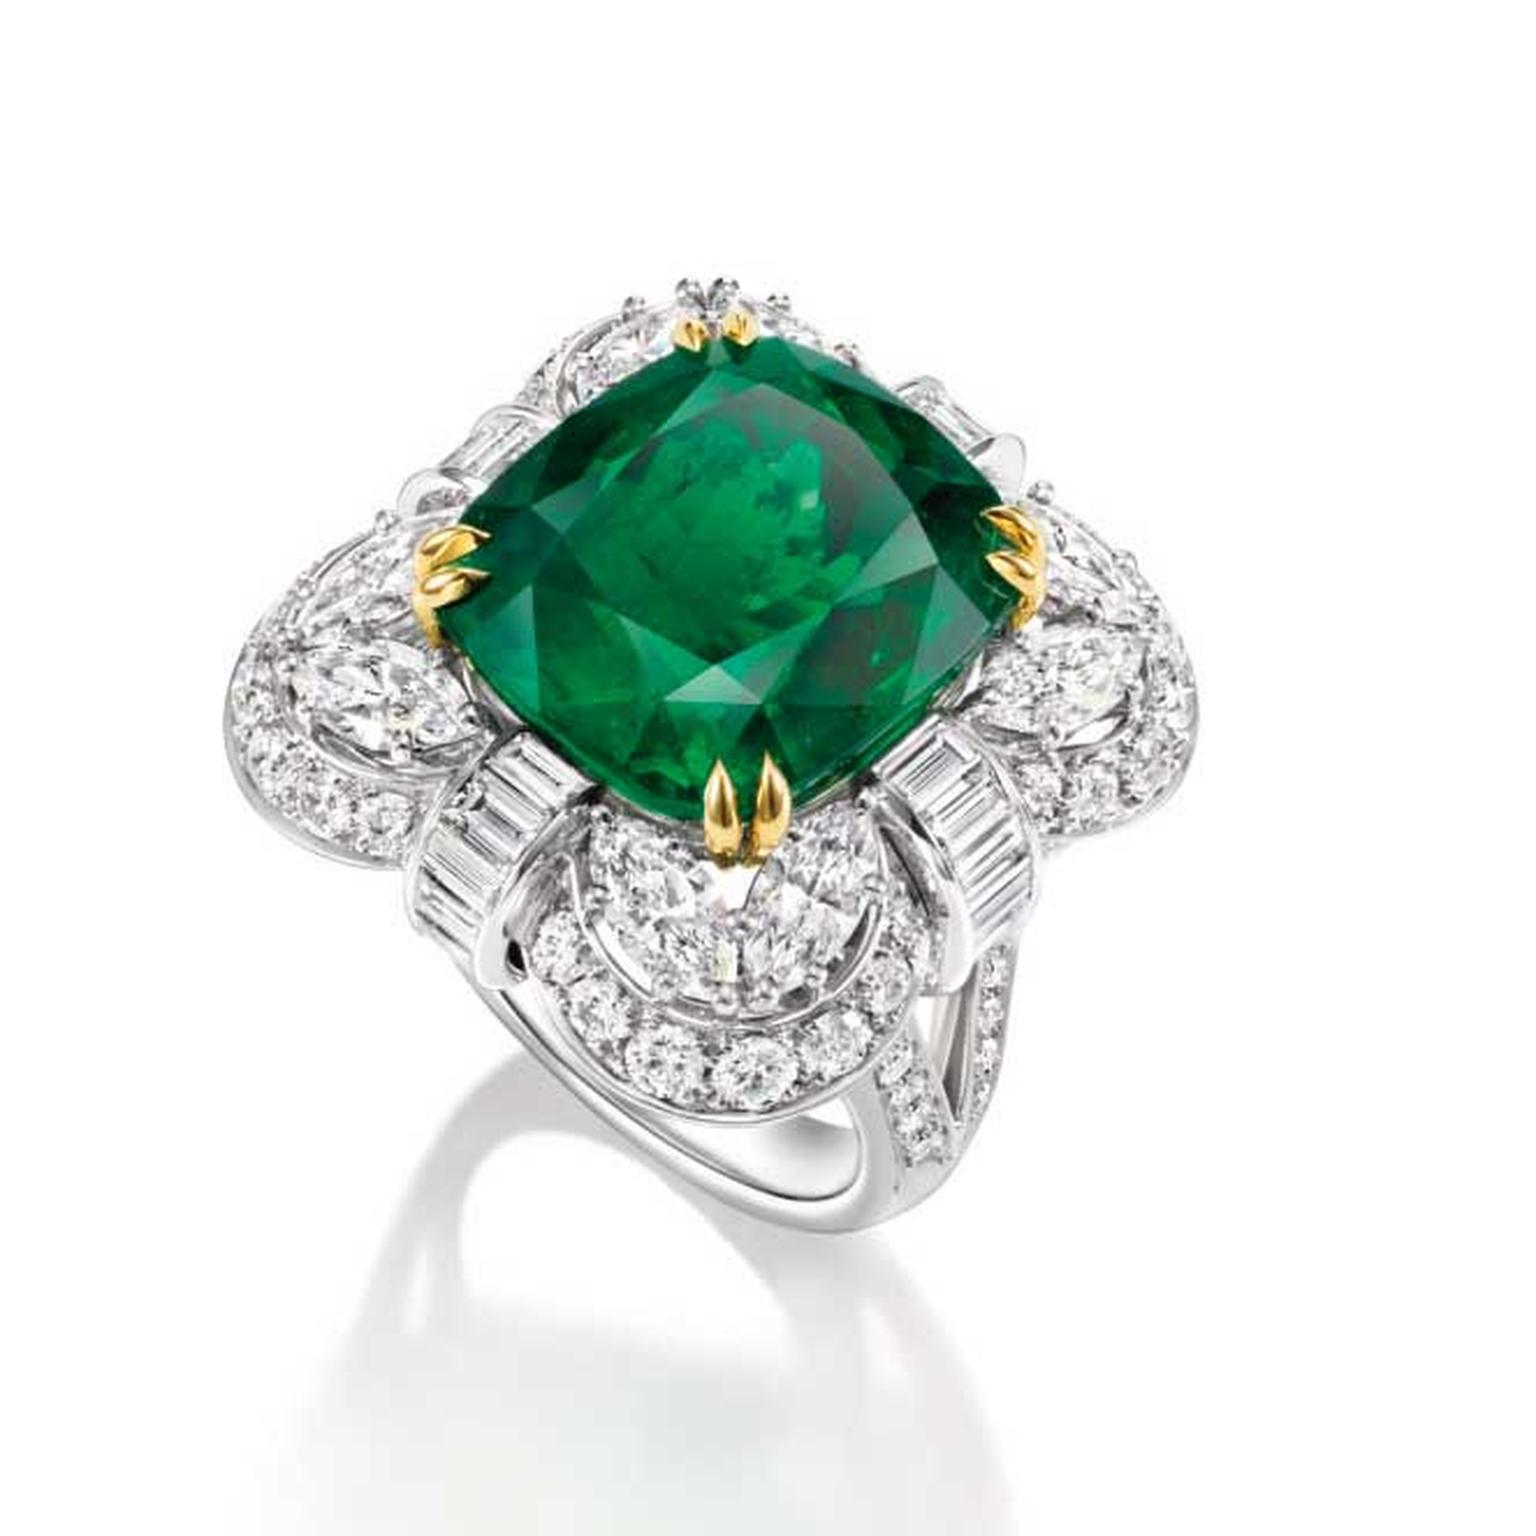  Harry Winston emerald cushion cut 15.67 carat ring